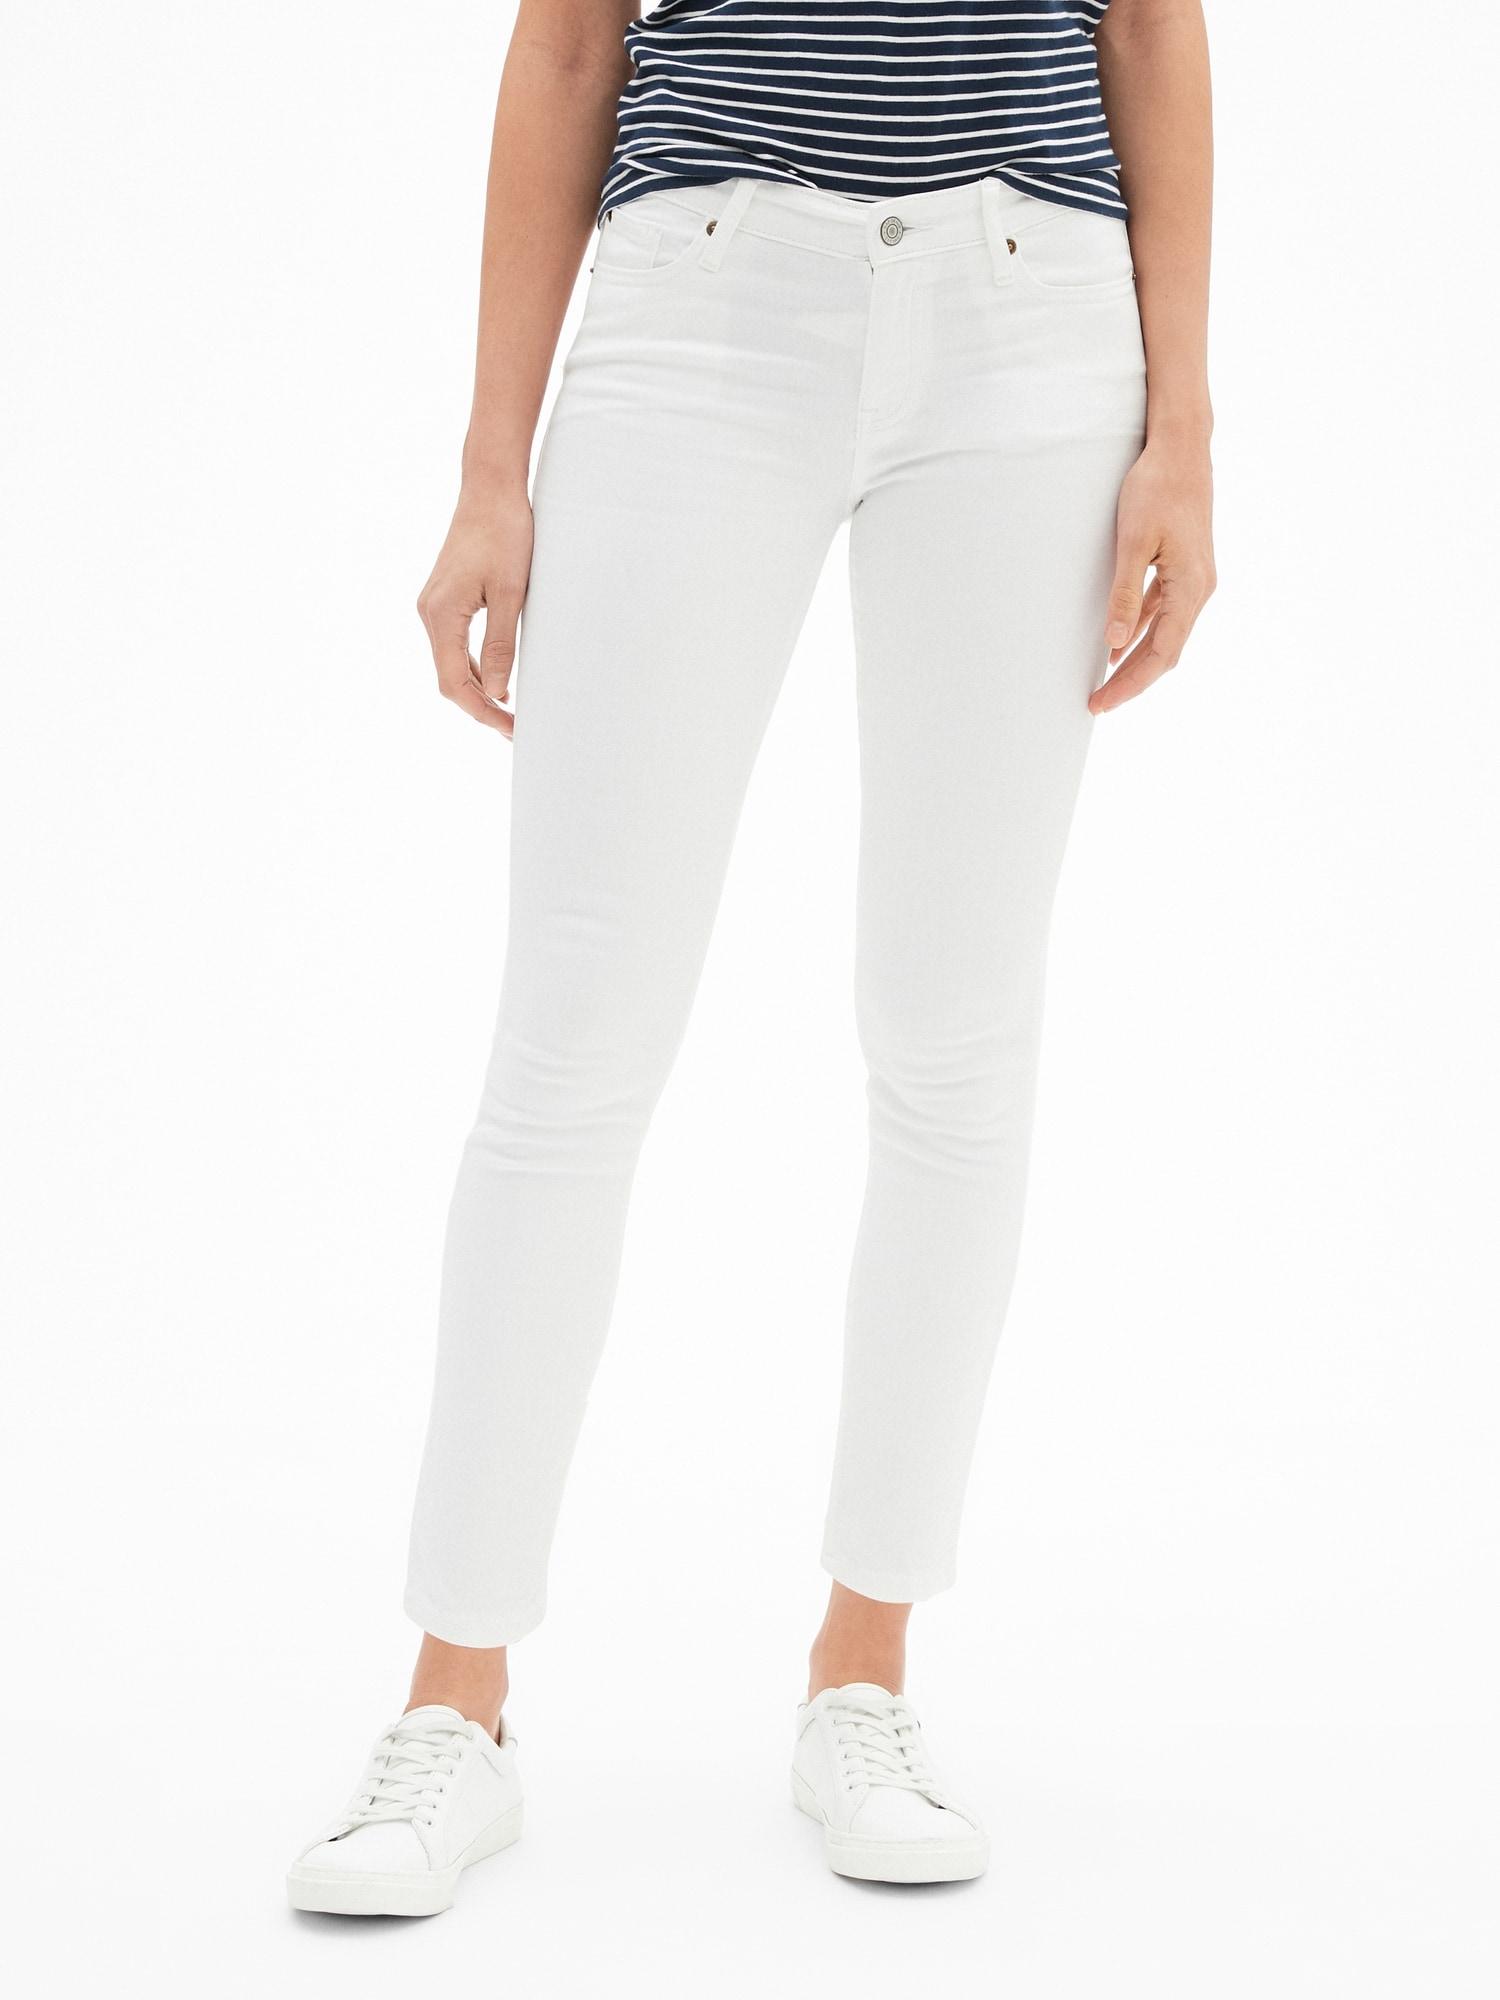 GAP Factory Denim Mid Rise Legging Skimmer Jeans in White - Save 15% - Lyst